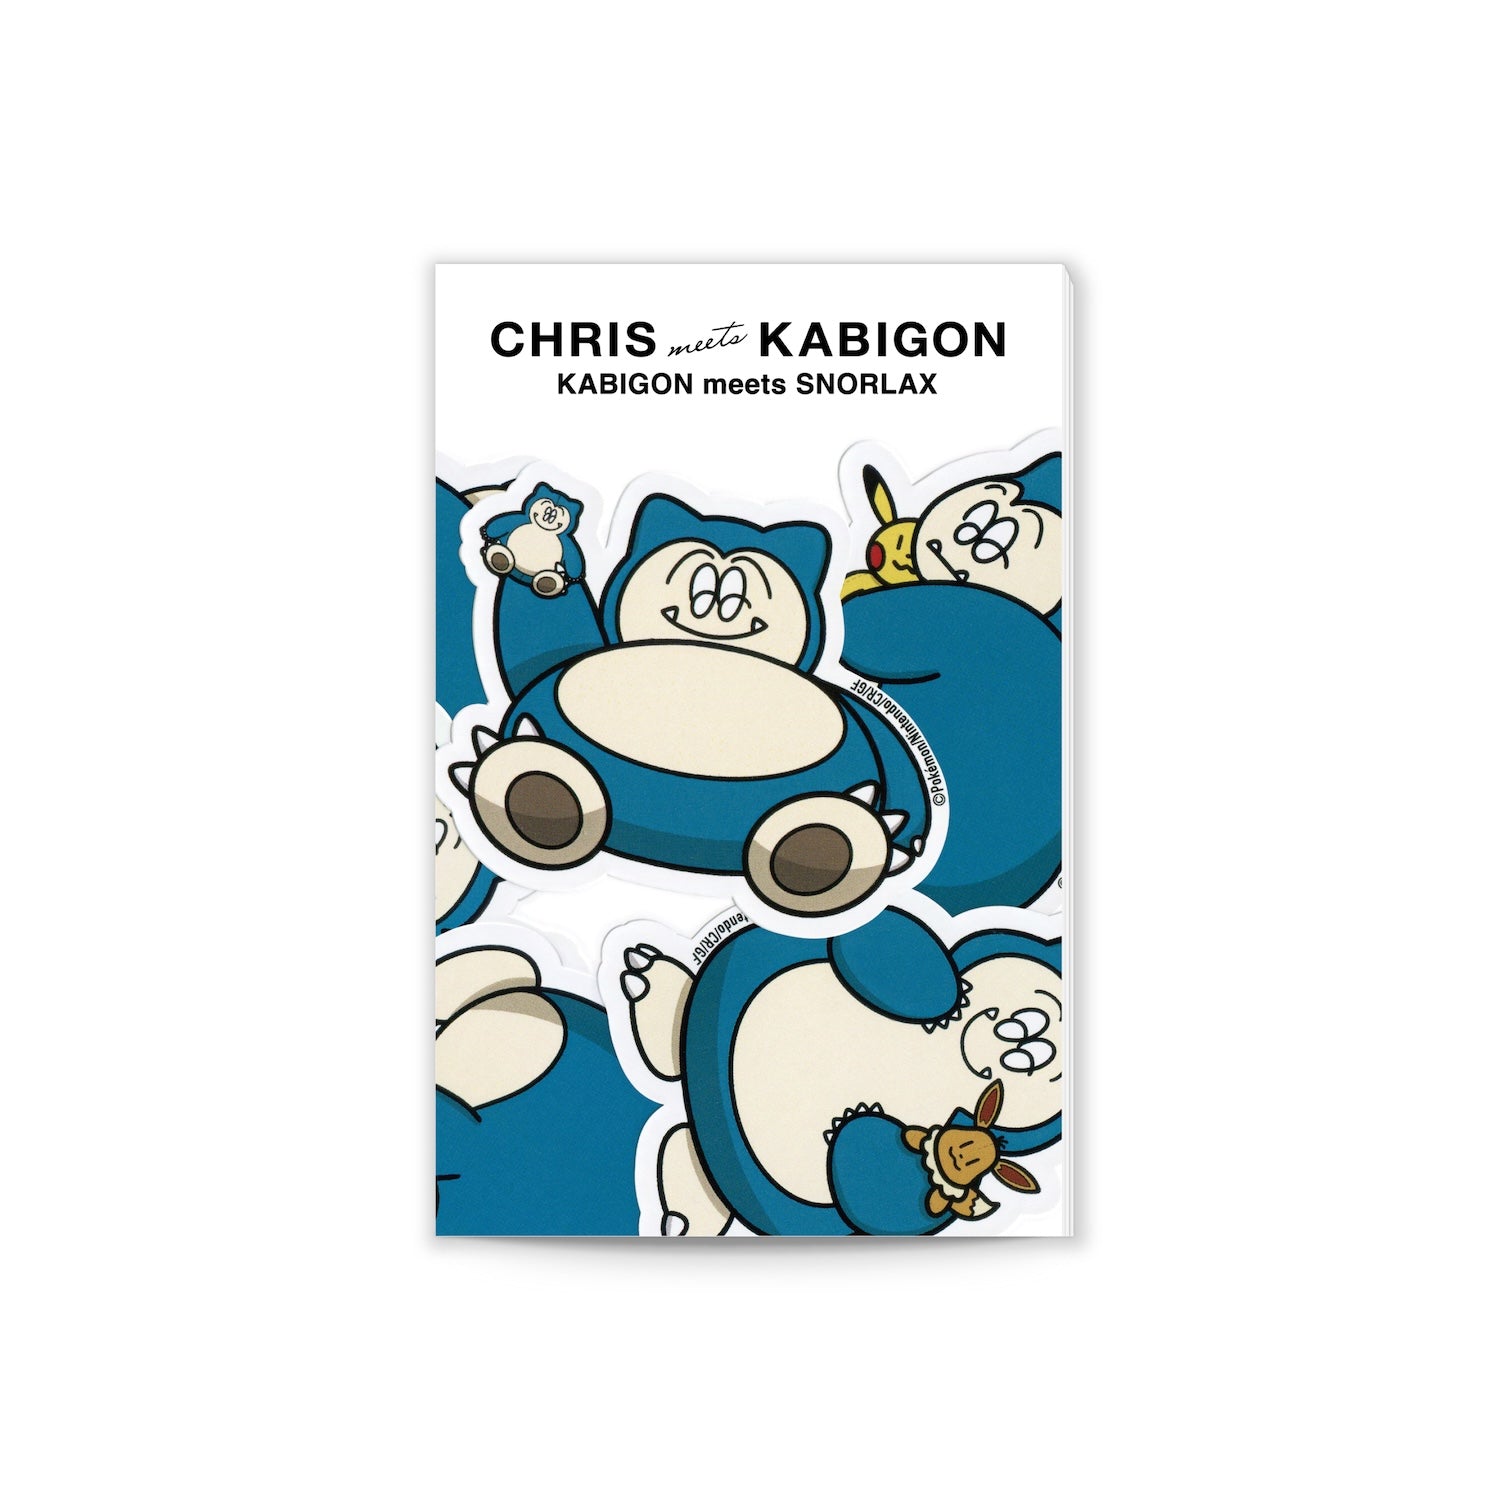 予約商品】「CHRIS meets KABIGON / KABIGON meets SNORLAX」公式図録 